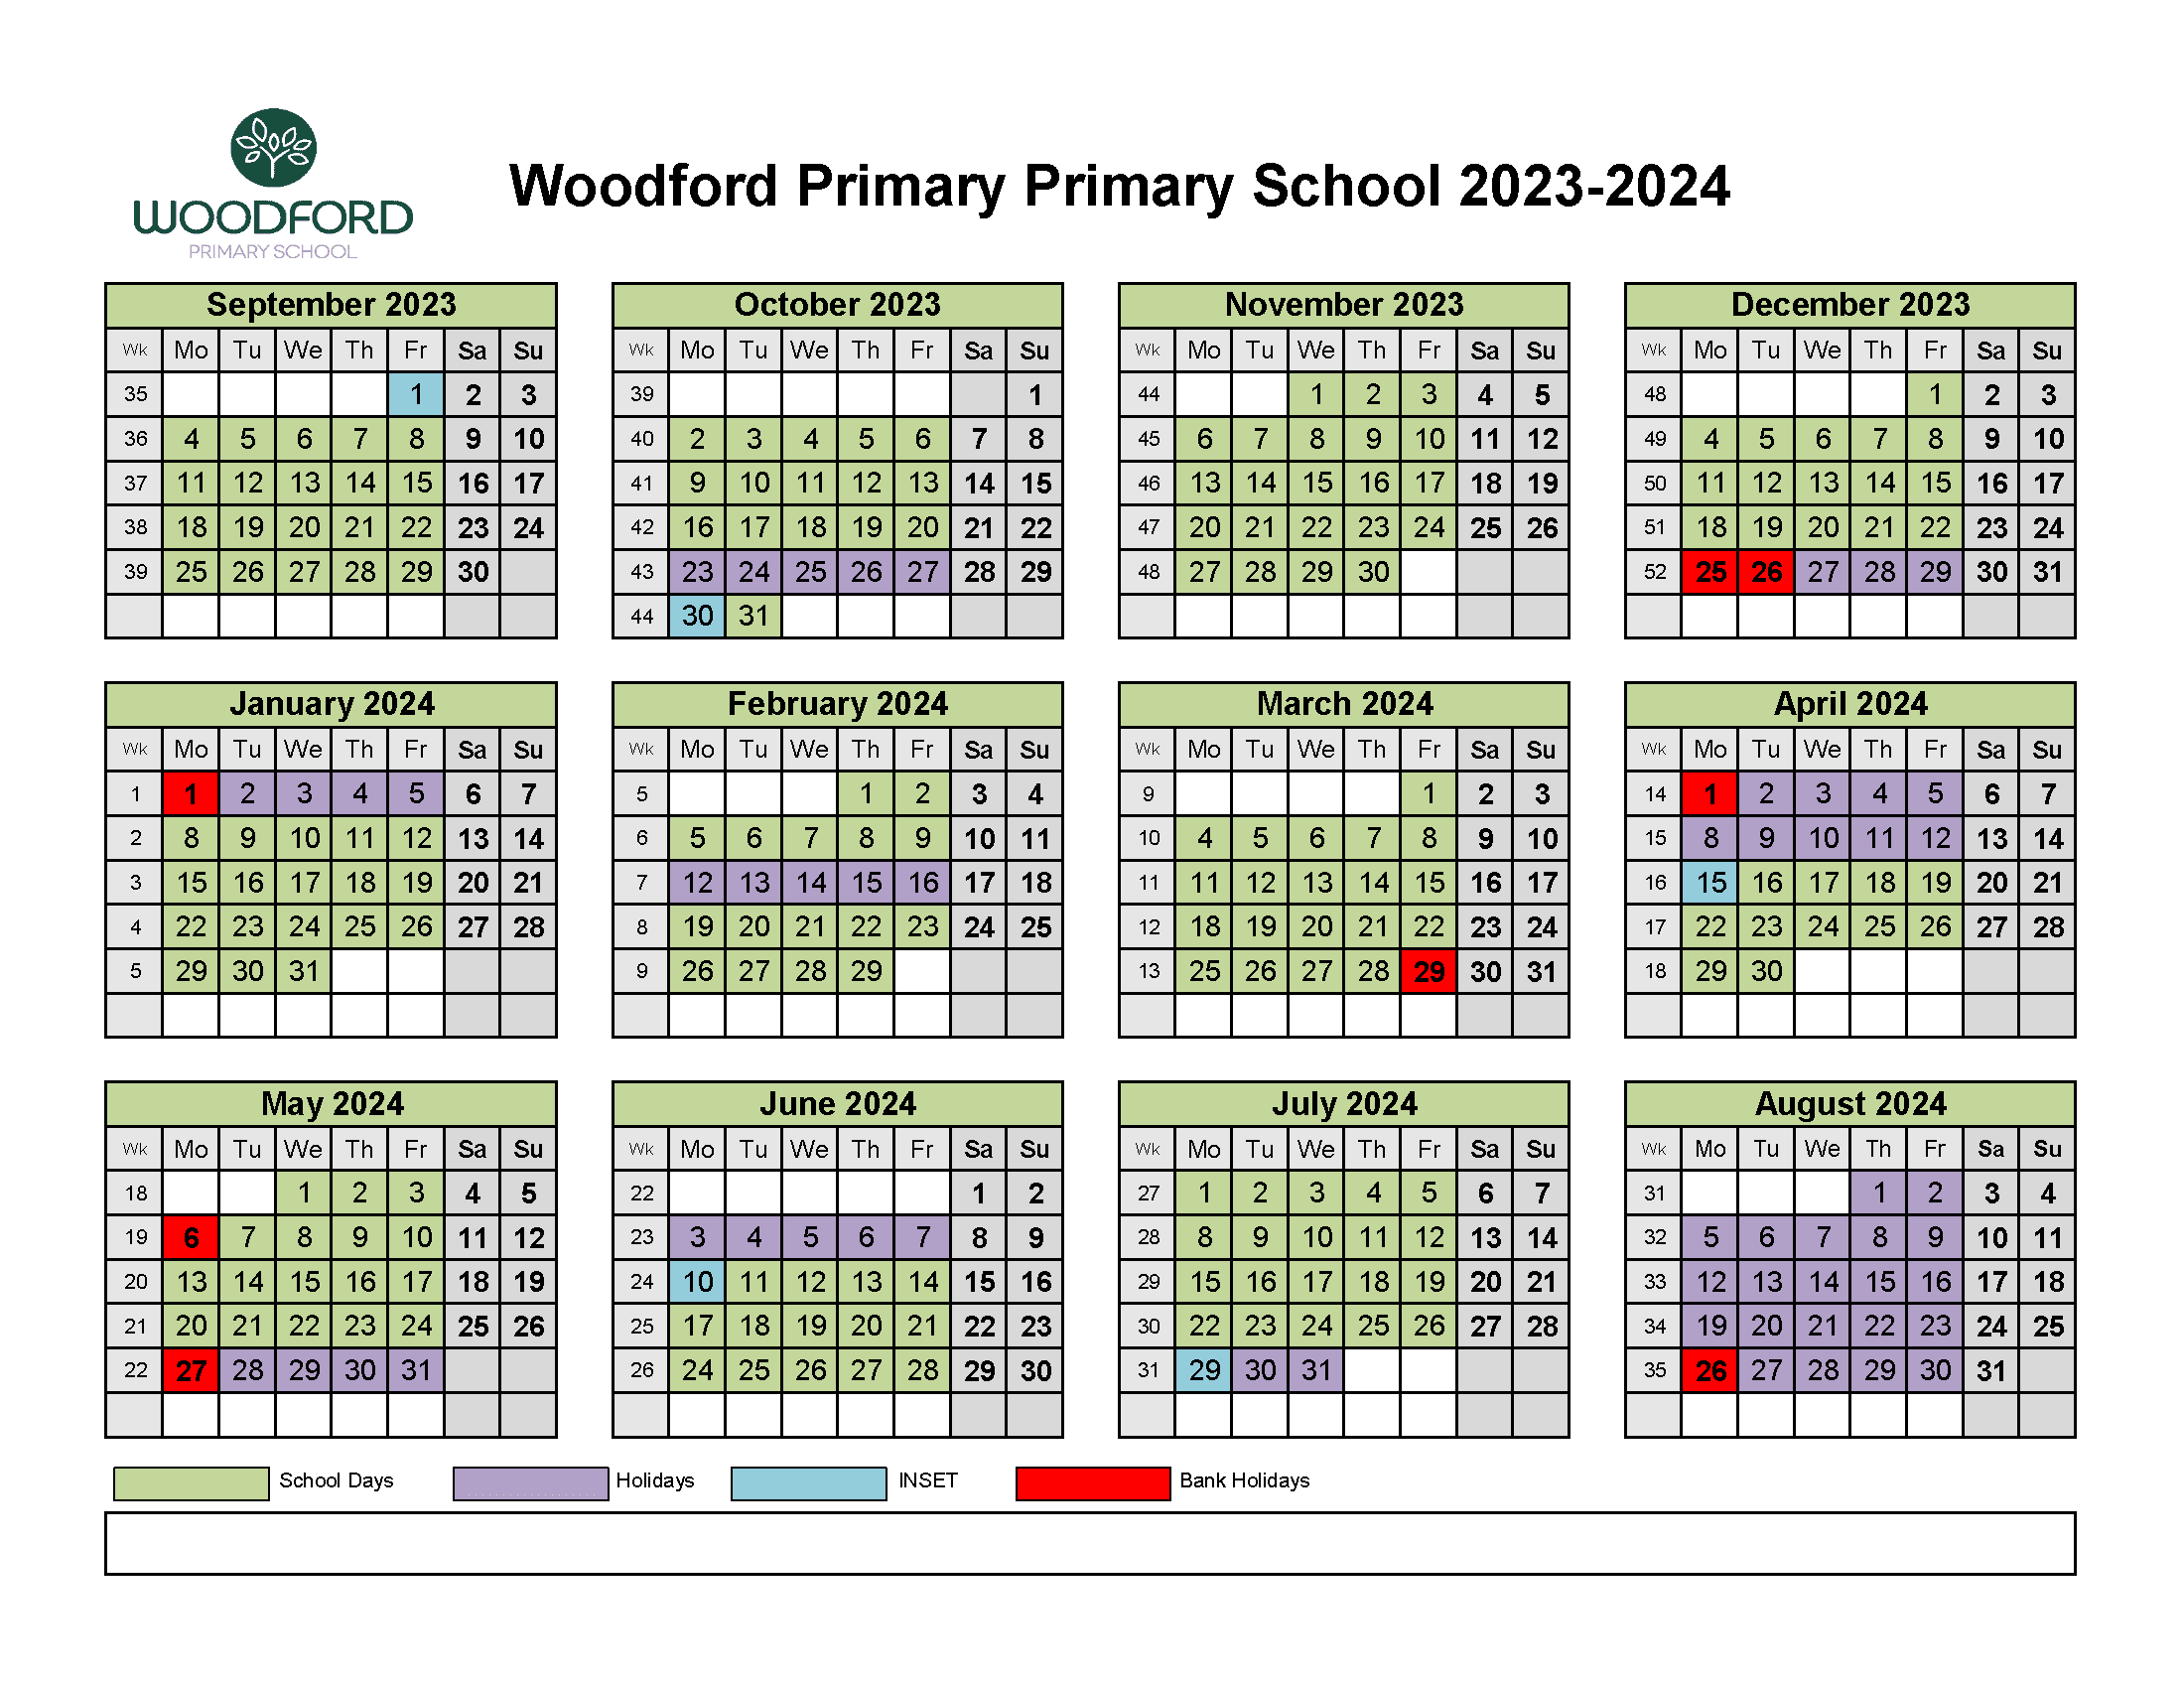 2023 - 2024 calendar view of the school term dates.